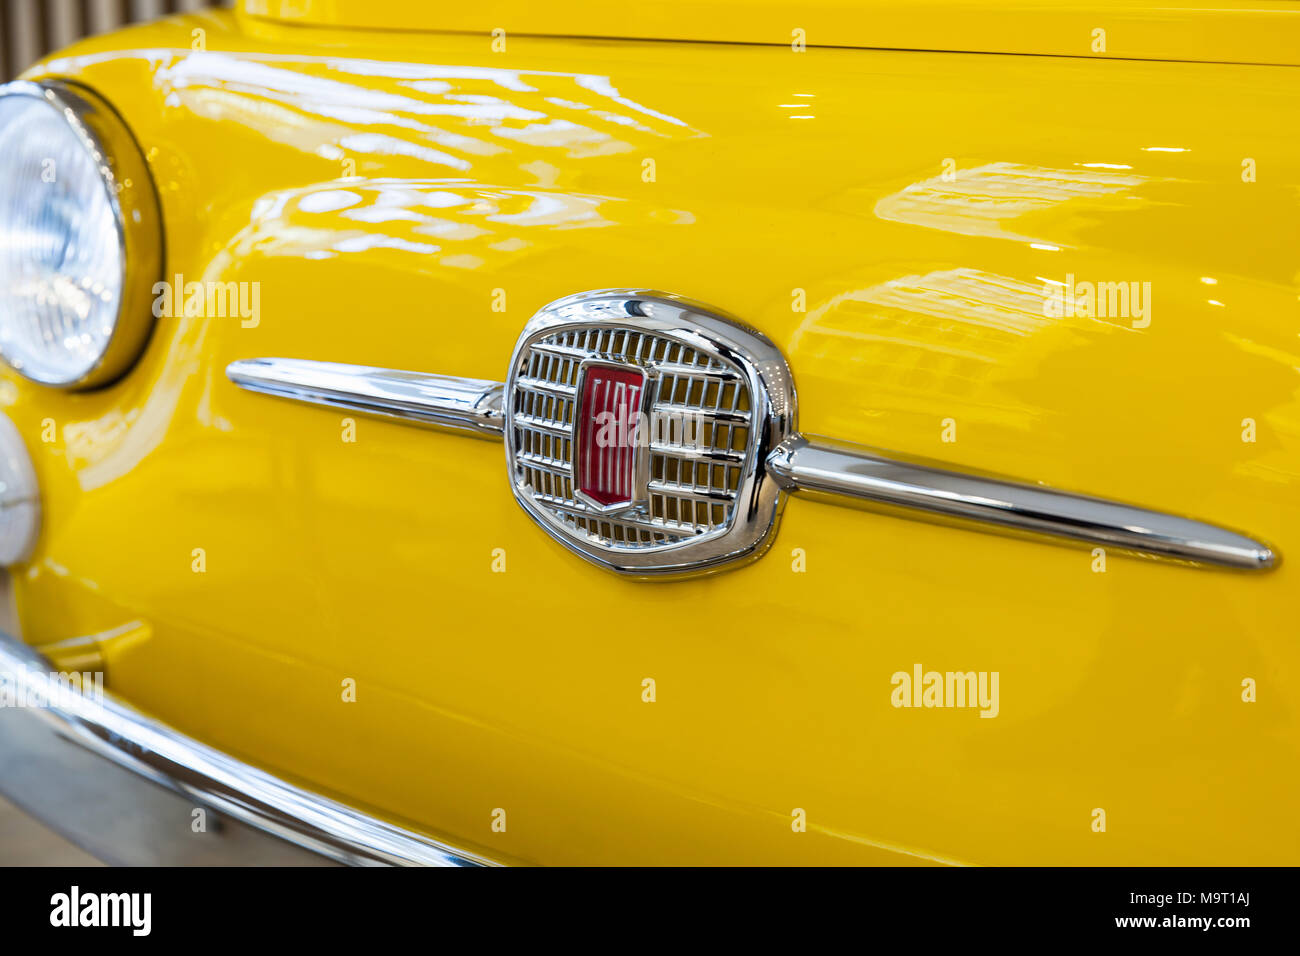 Milan, Italy - January 19, 2018: FIAT Group company logo on yellow Fiat 500 car hood, close up photo with selective focus Stock Photo